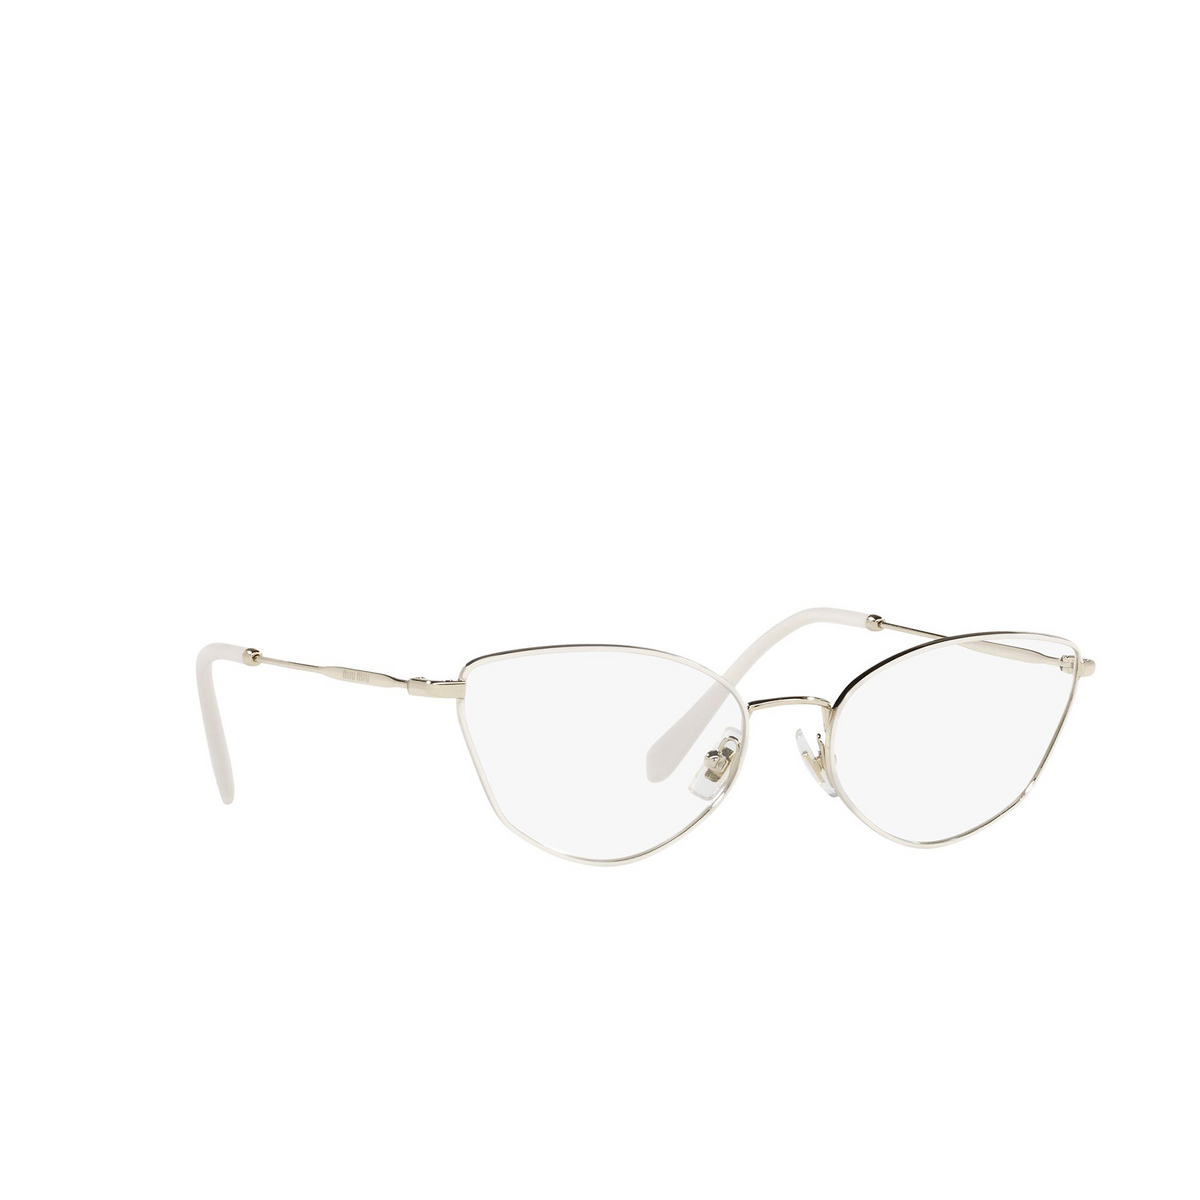 Miu Miu® Cat-eye Eyeglasses: MU 51SV color Ivory 2821O1 - three-quarters view.